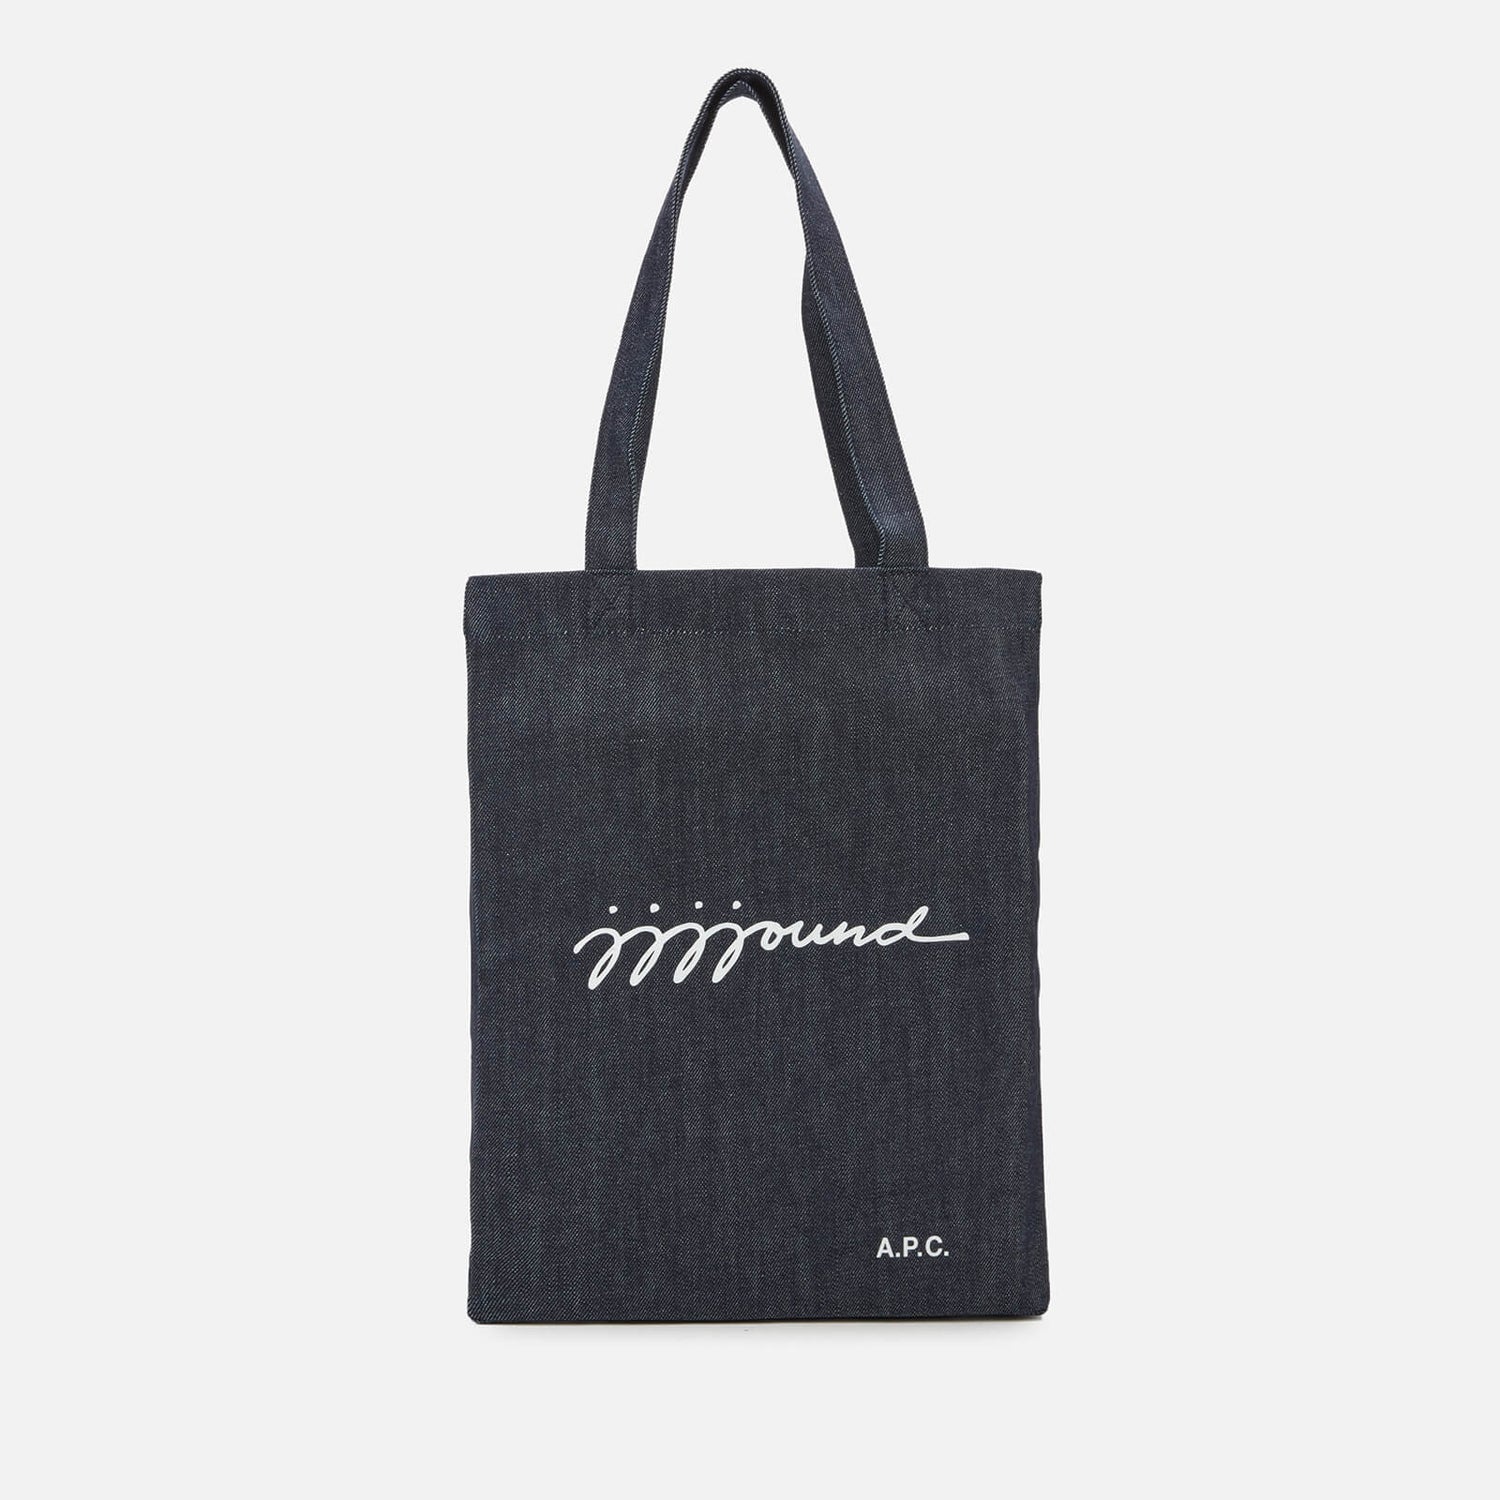 A.P.C. Men's JJJJound Tote Bag - Indigo - Free UK Delivery Available